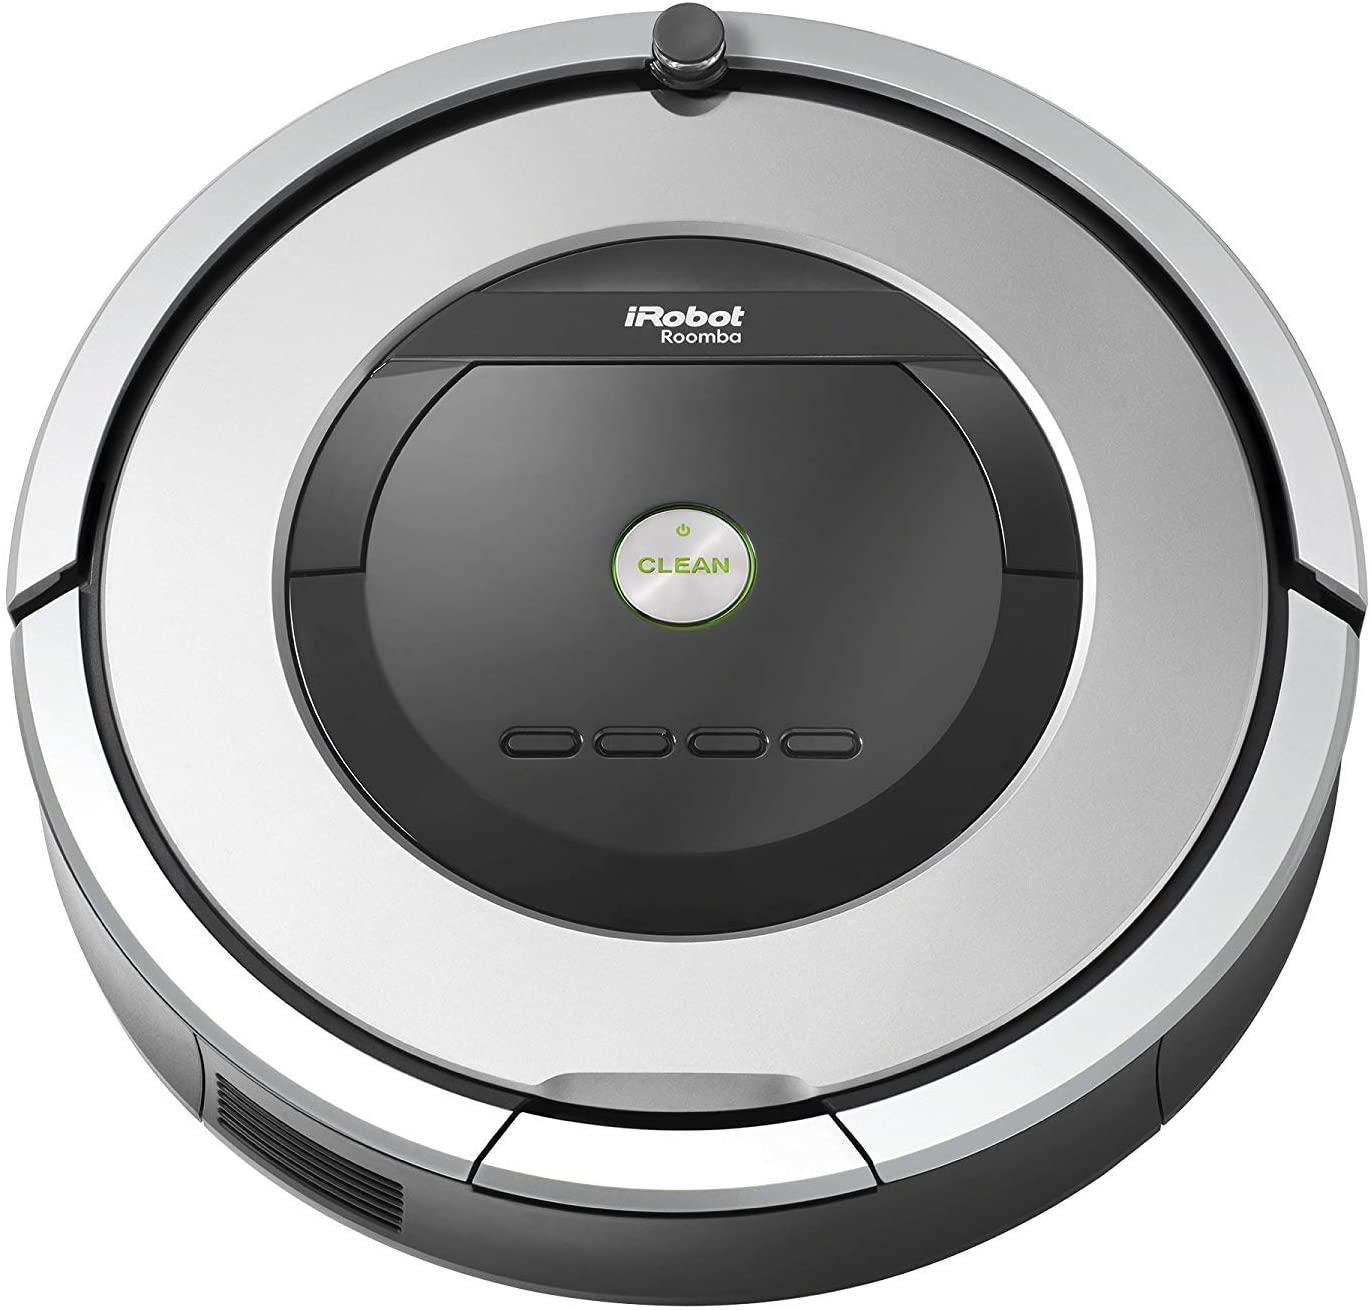 iRobot Roomba 860 Robotic Vacuum for $199.99 Shipped